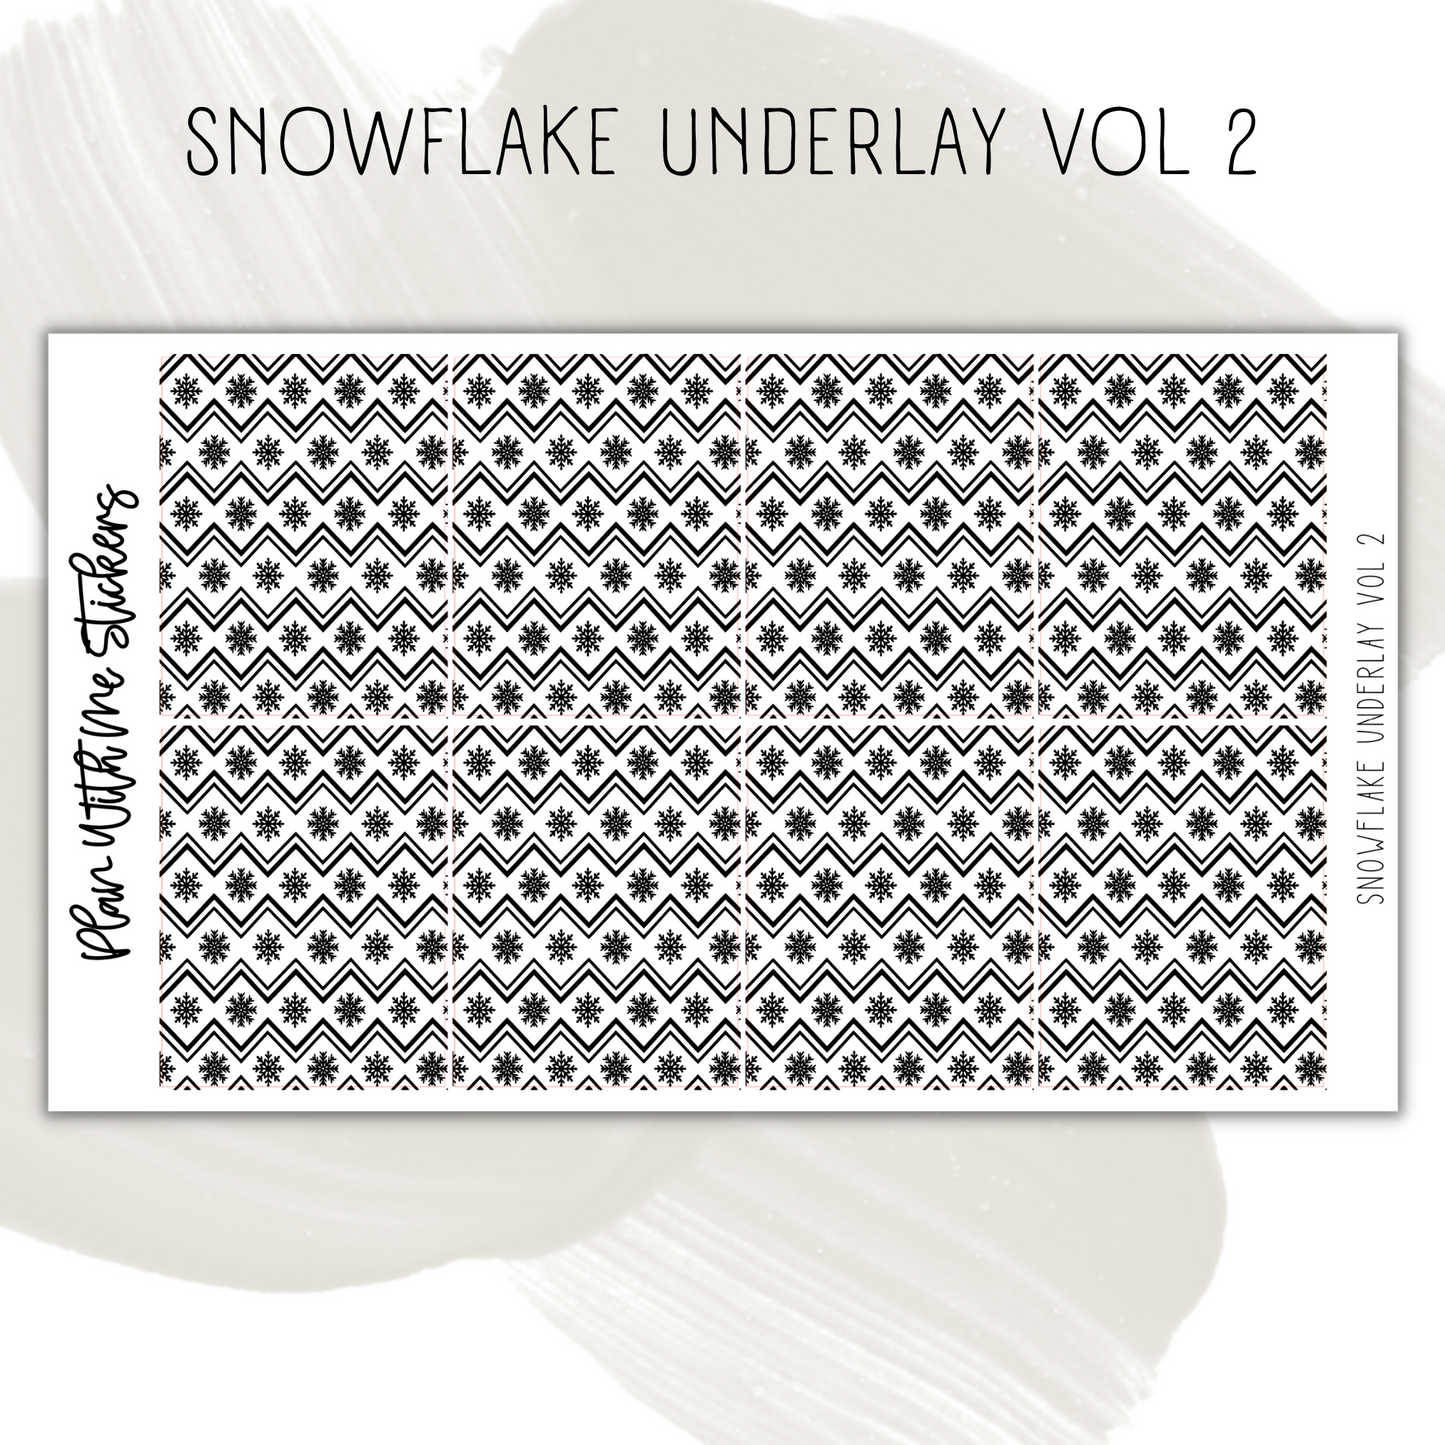 Snowflake Underlay Vol 2